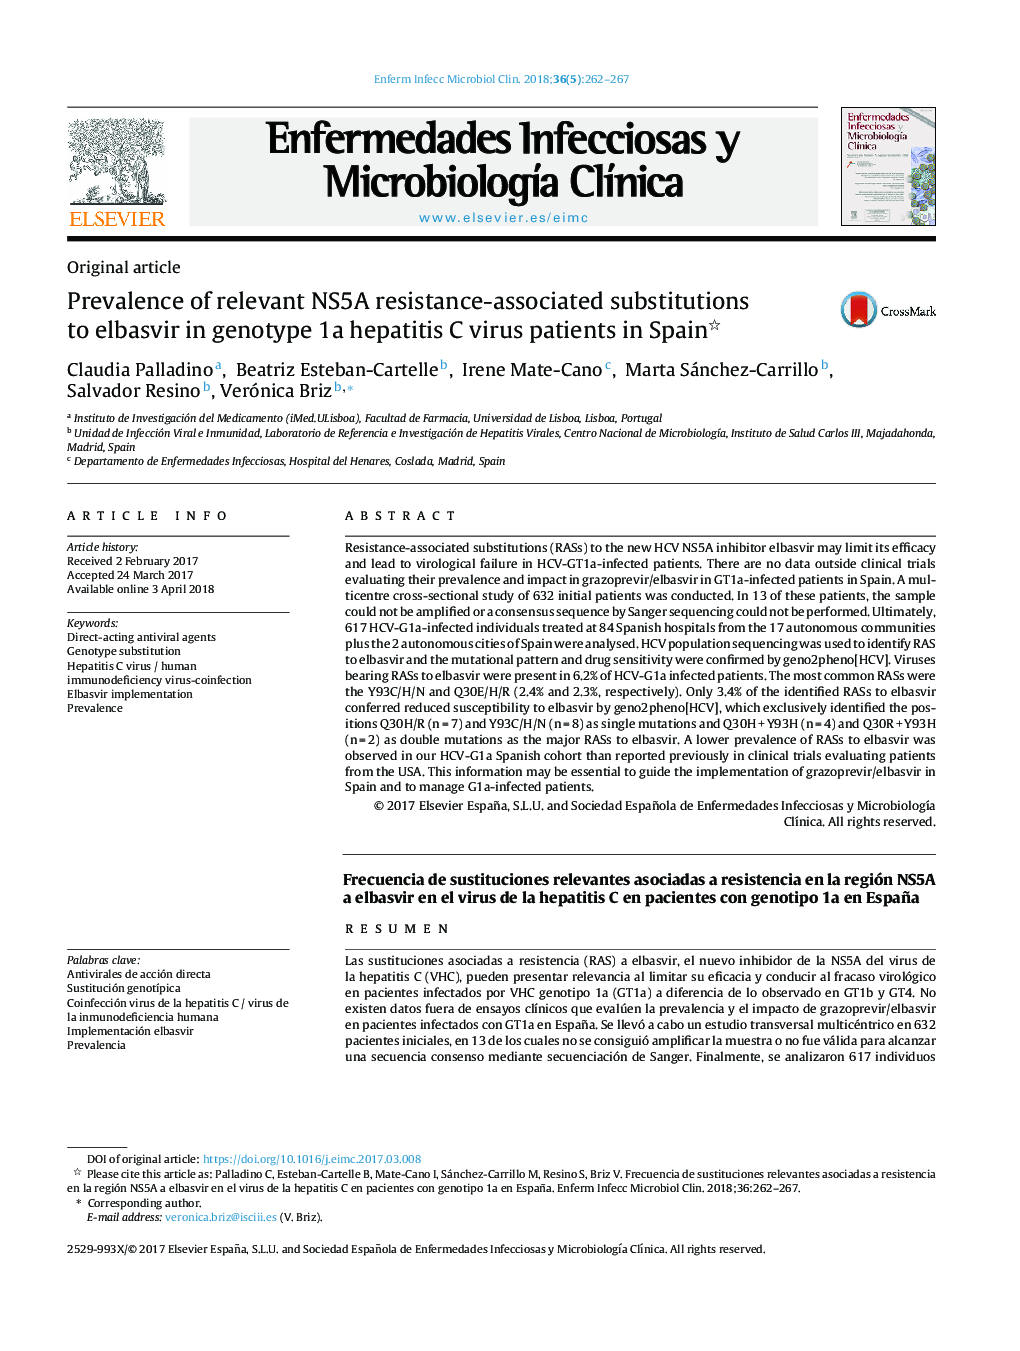 Prevalence of relevant NS5A resistance-associated substitutions to elbasvir in genotype 1a hepatitis C virus patients in Spain